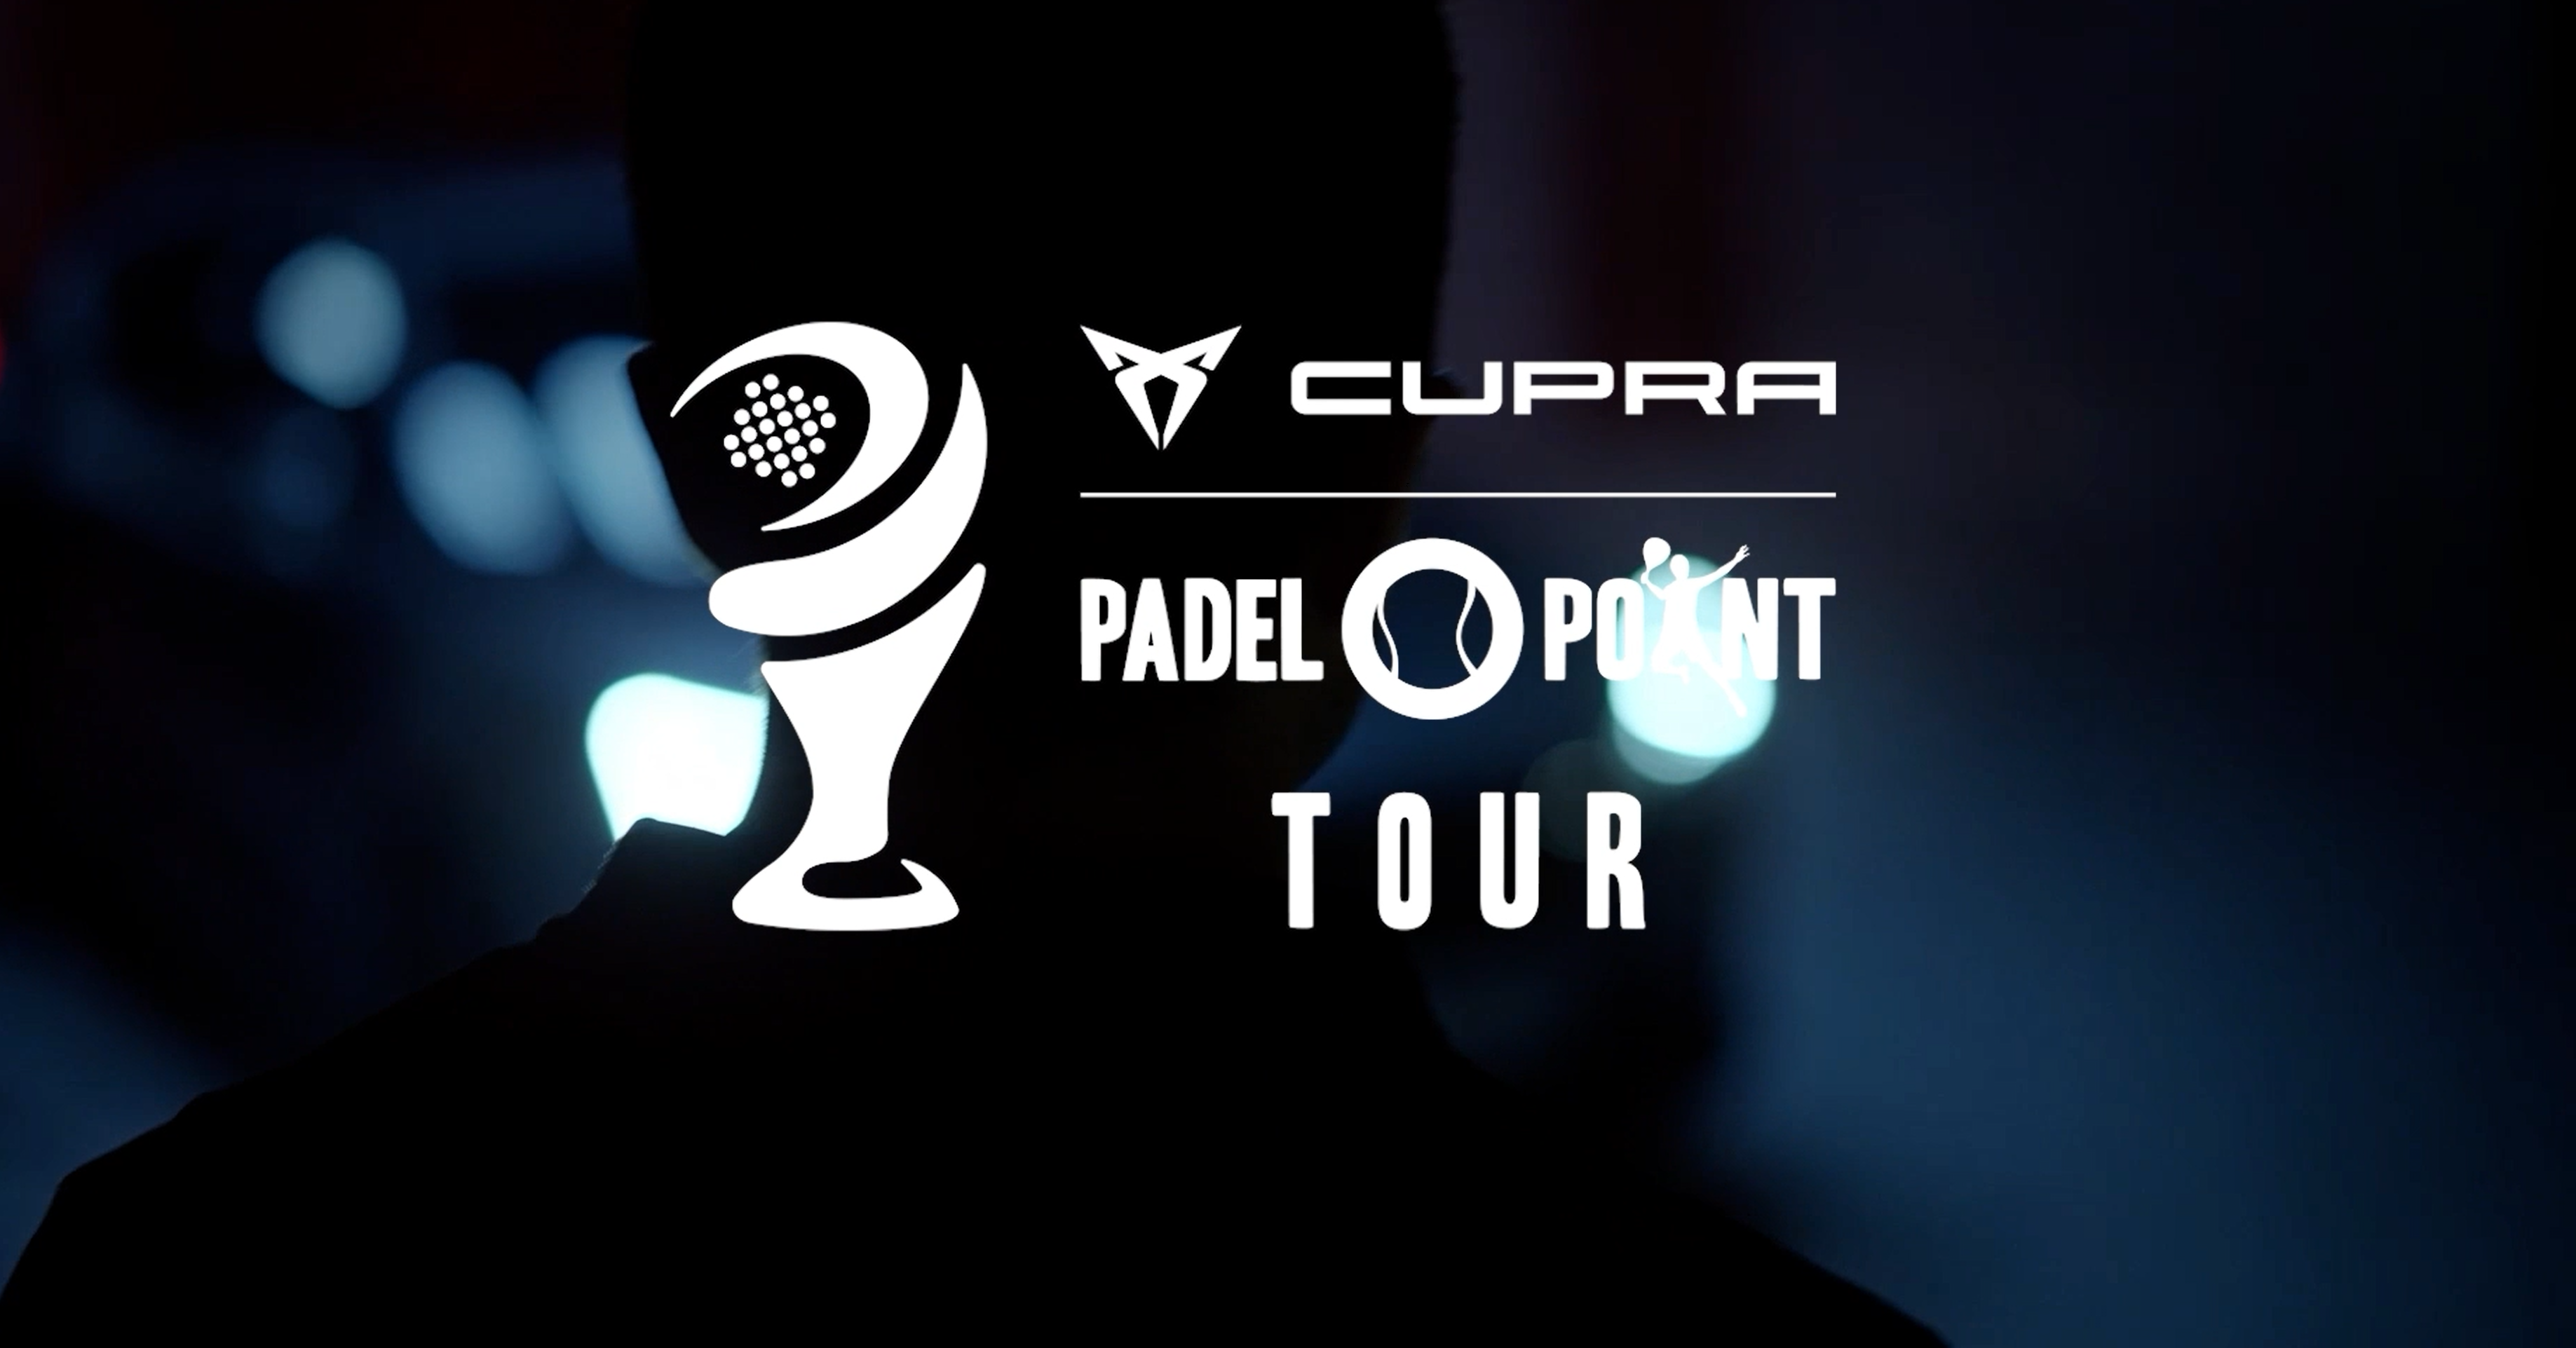 Cupra Padel-Point Tour (Toulouse): Het programma!